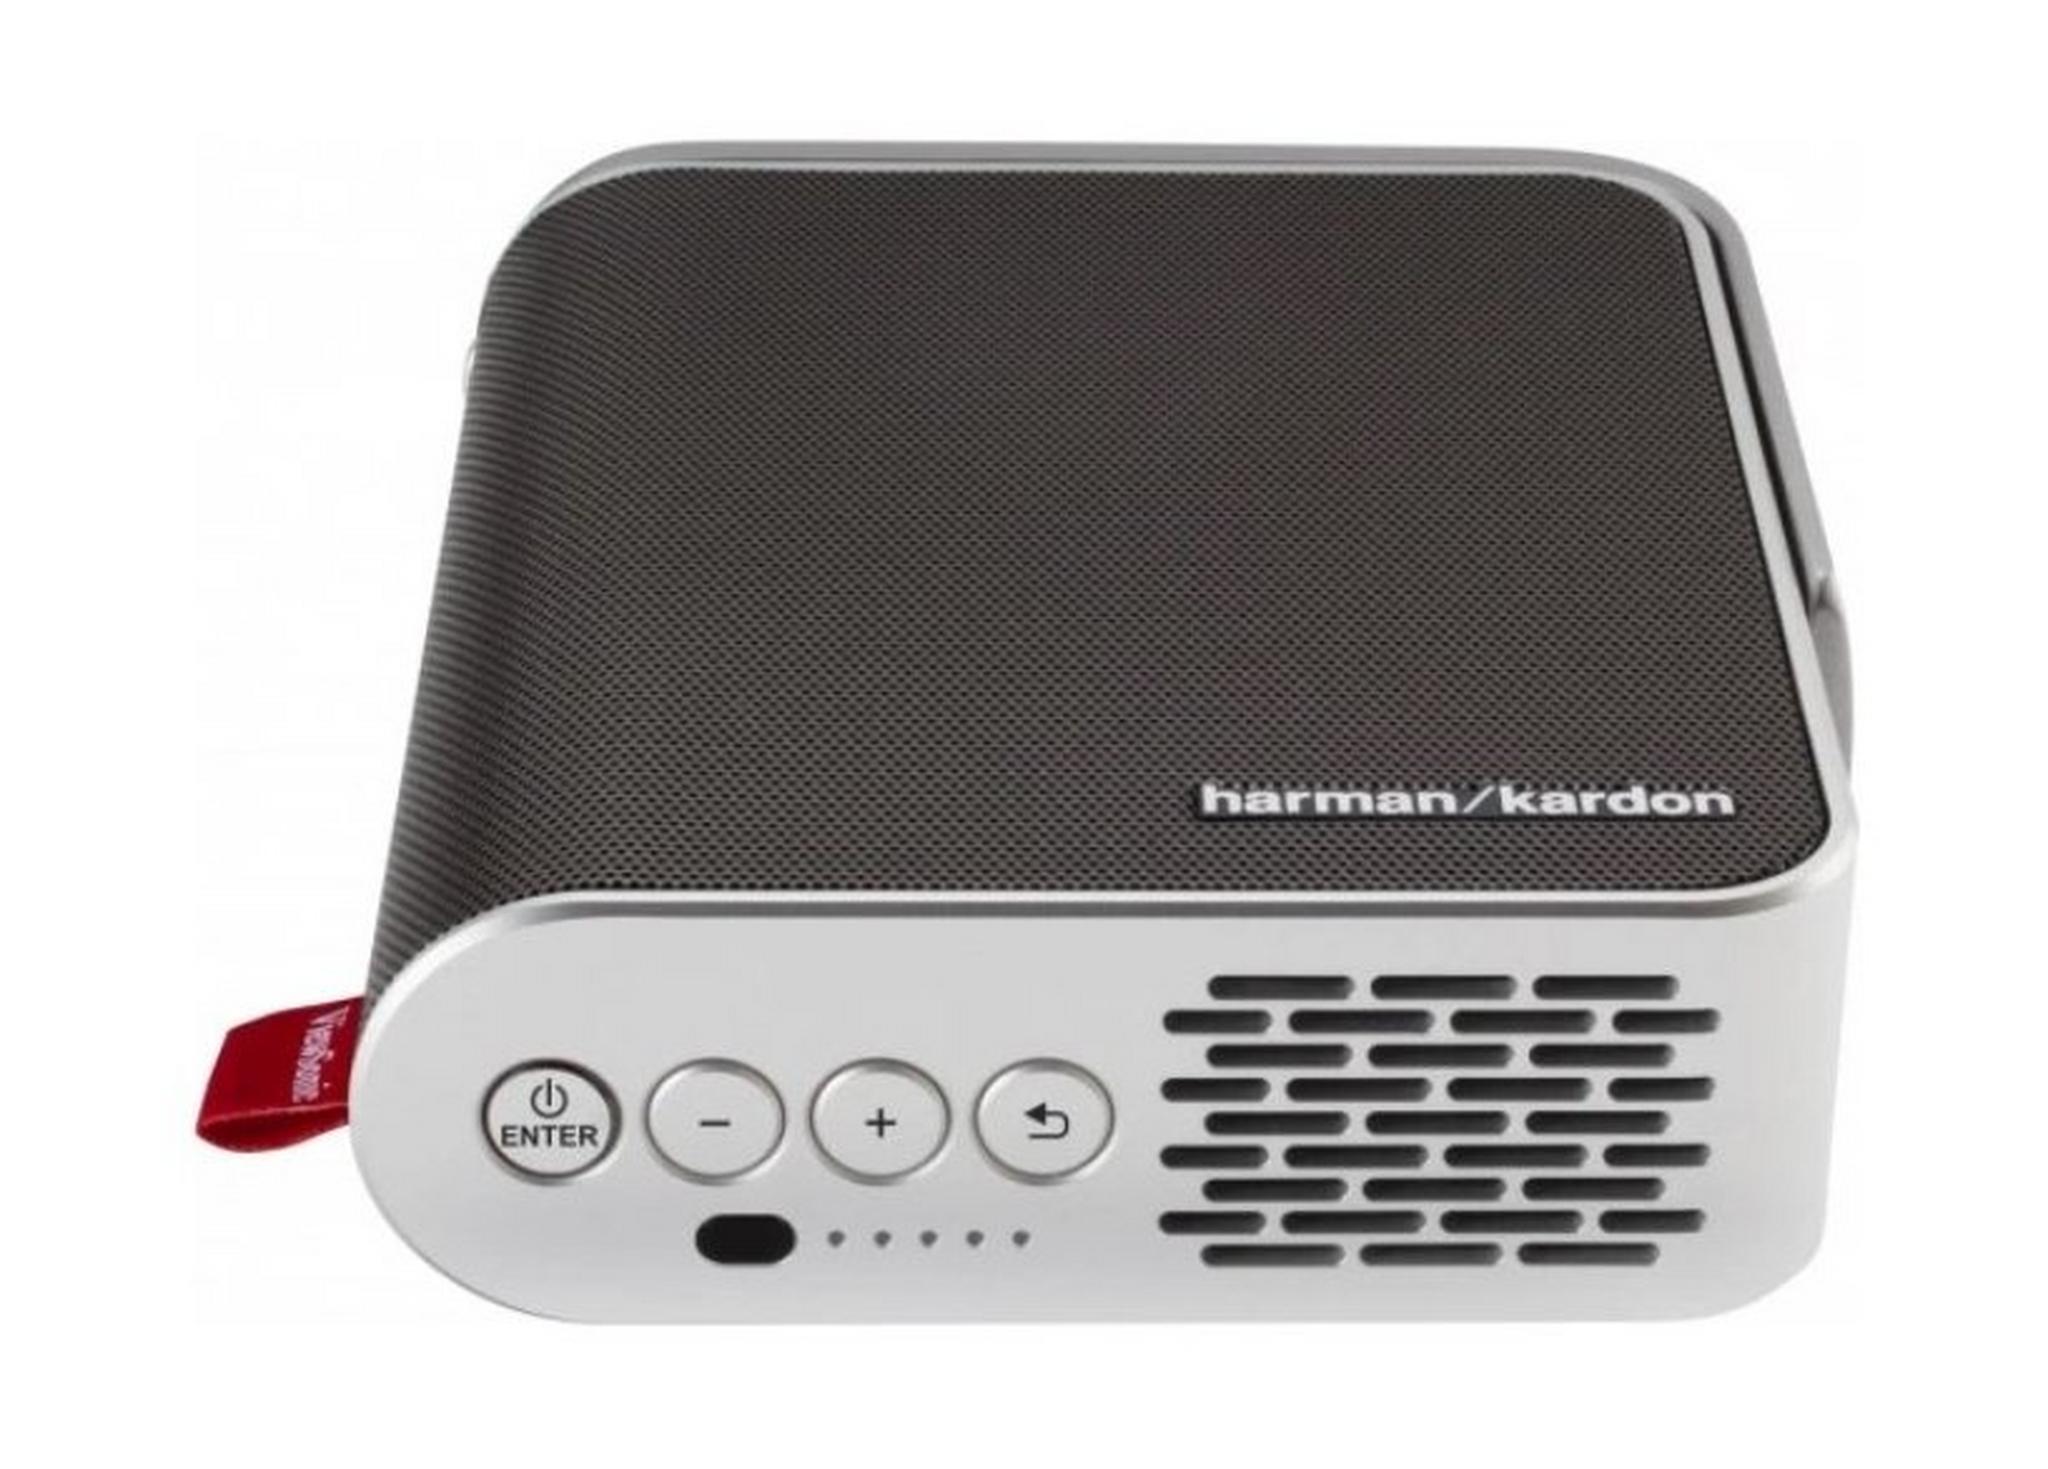 ViewSonic M1+ Smart LED Portable Projector with Harman Kardon Speakers